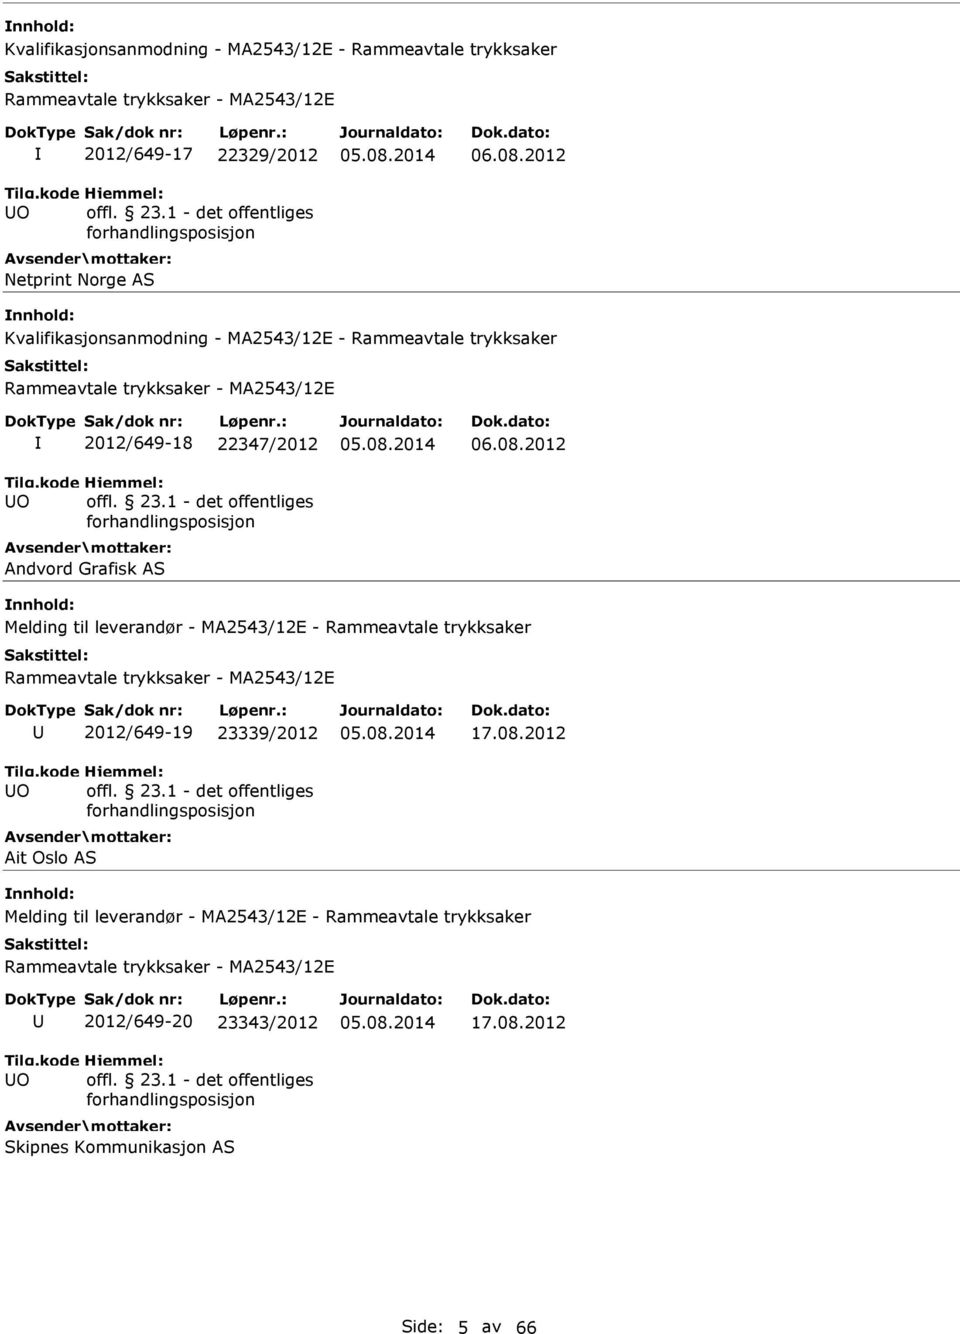 2012 Melding til leverandør - MA2543/12E - Rammeavtale trykksaker 2012/649-19 23339/2012 Ait Oslo AS 17.08.